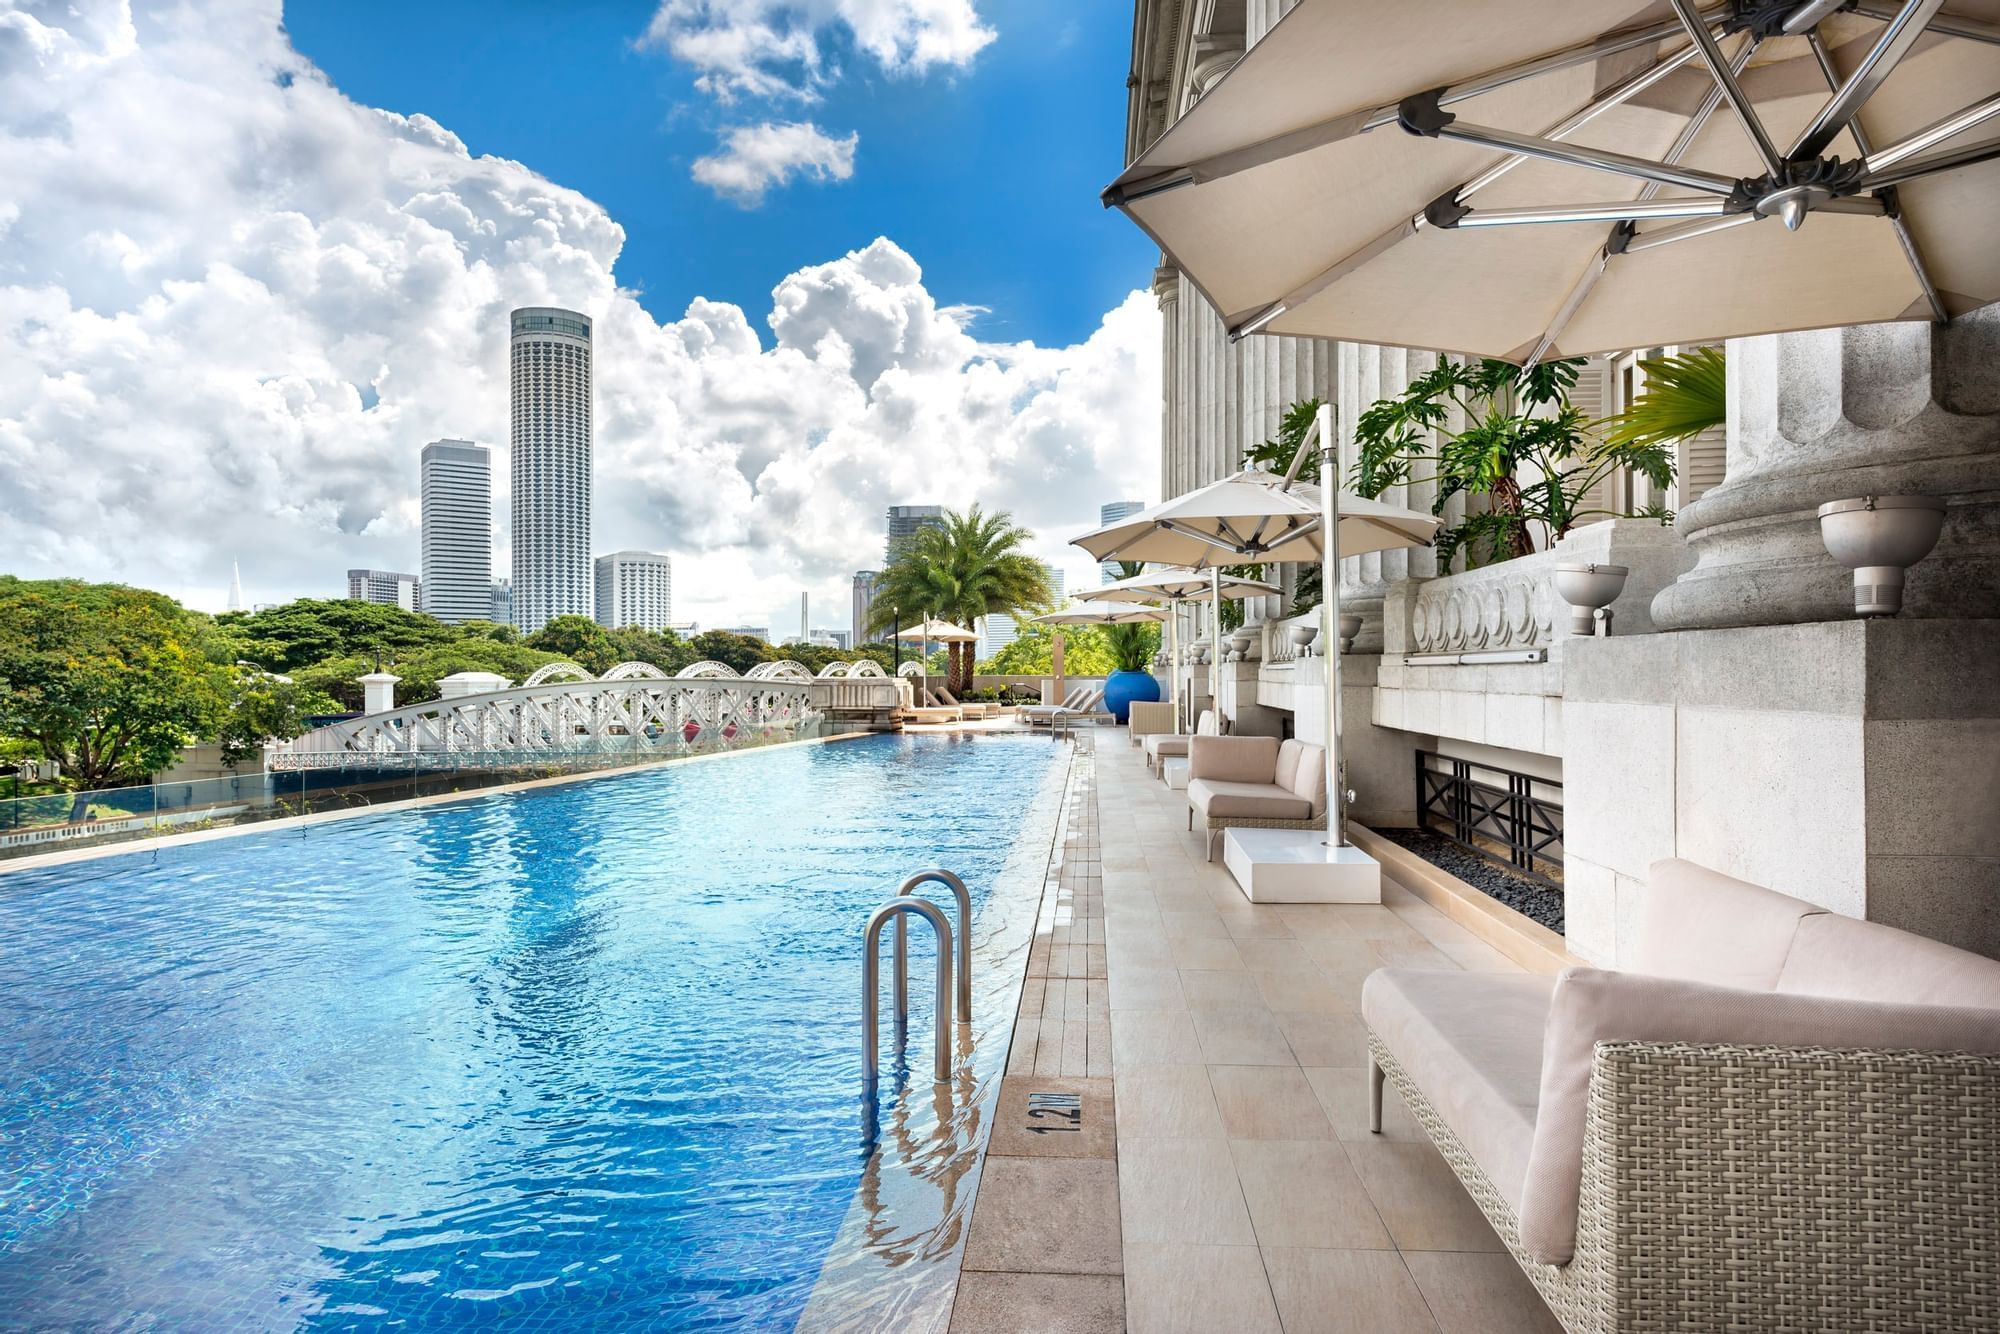 The Fullerton Hotel Singapore pool